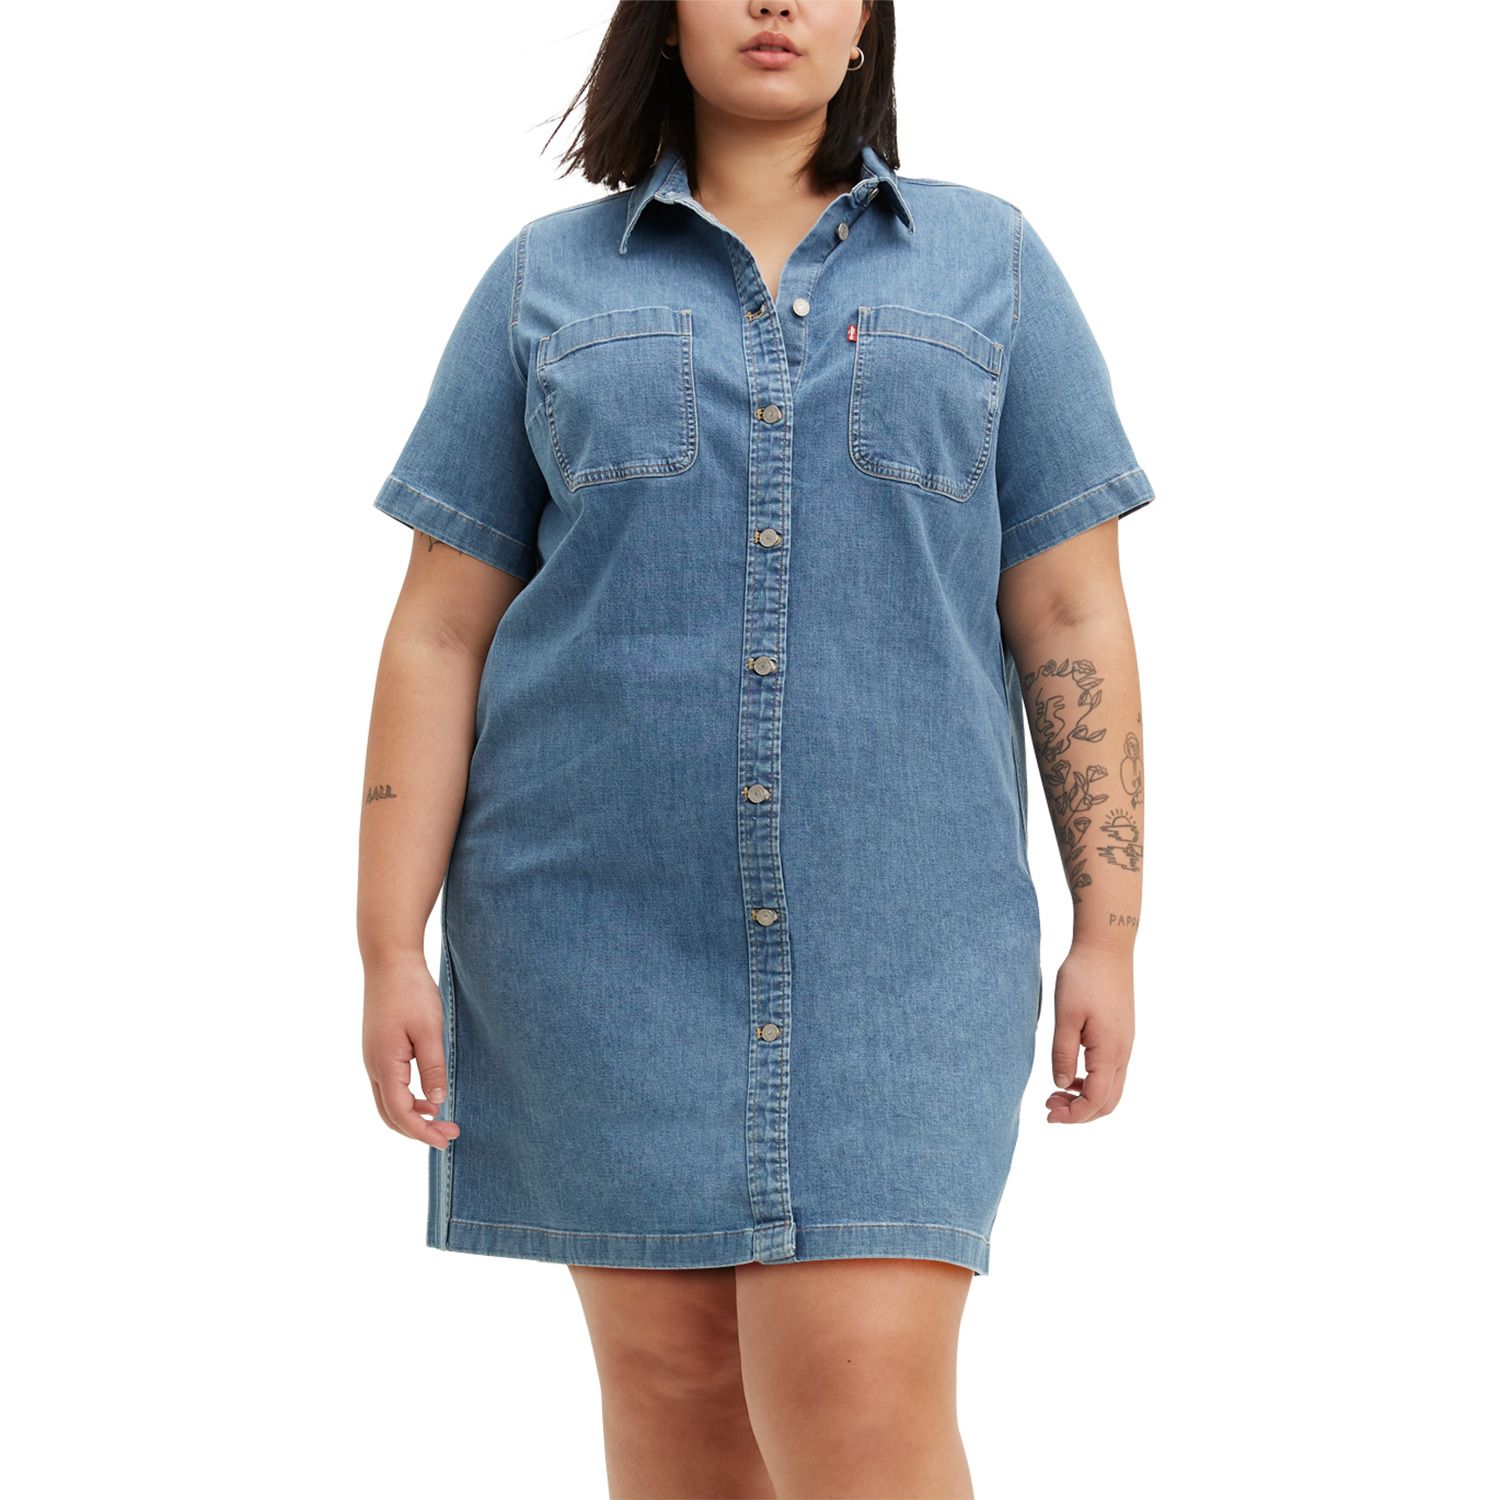 blue jean dress plus size